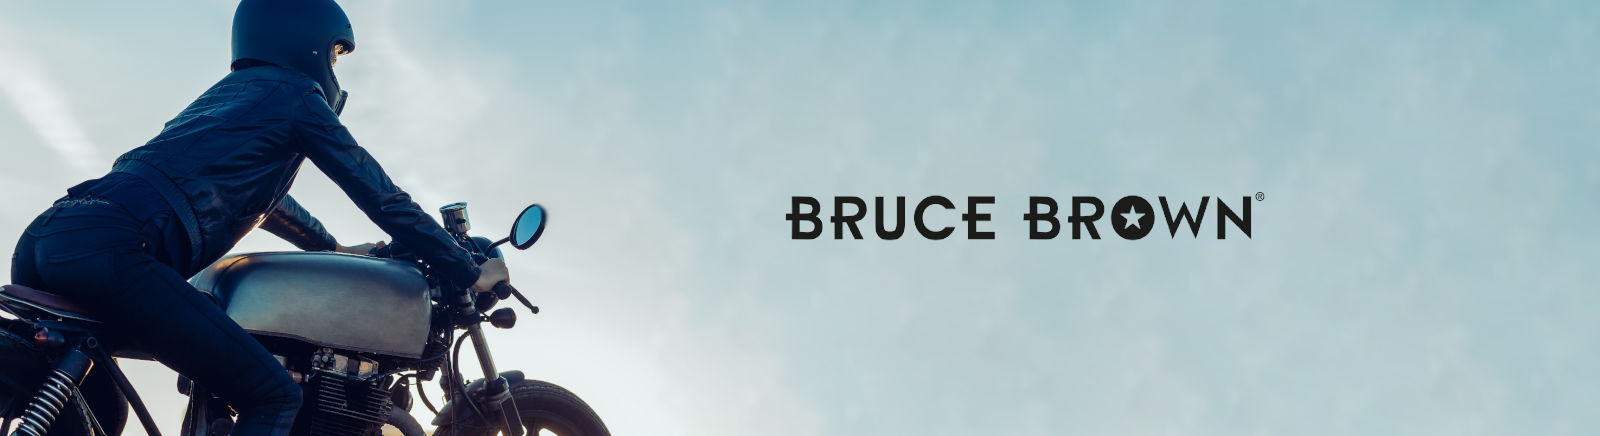 Bruce Brown Herrenschuhe bequem online kaufen bei Juppen